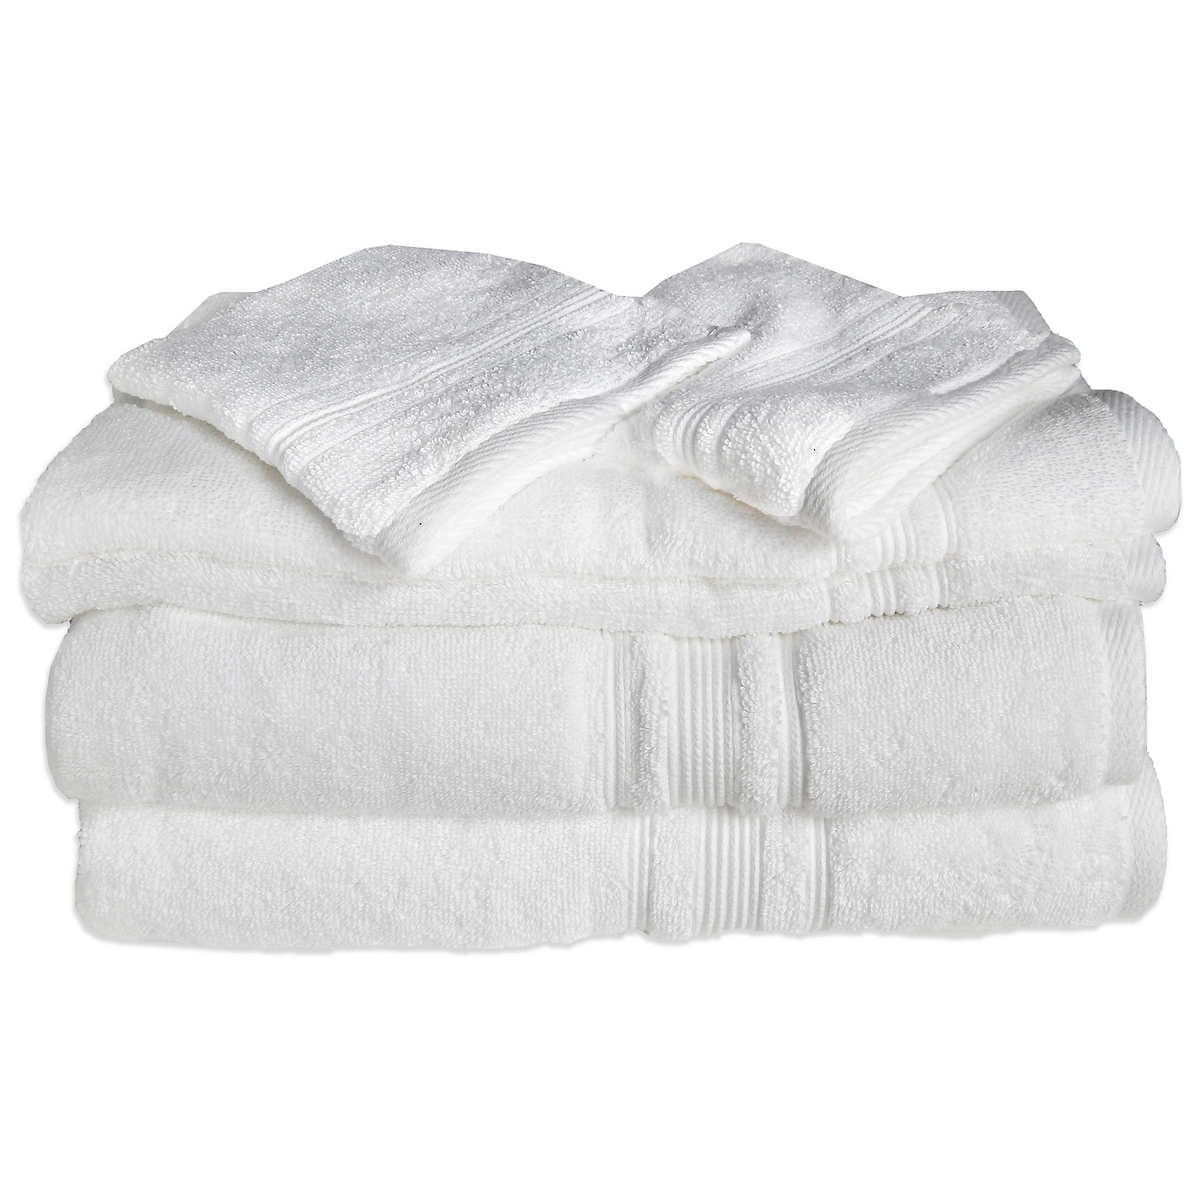 Charisma 100% Hygrocotton Towel Sets – RJP Unlimited